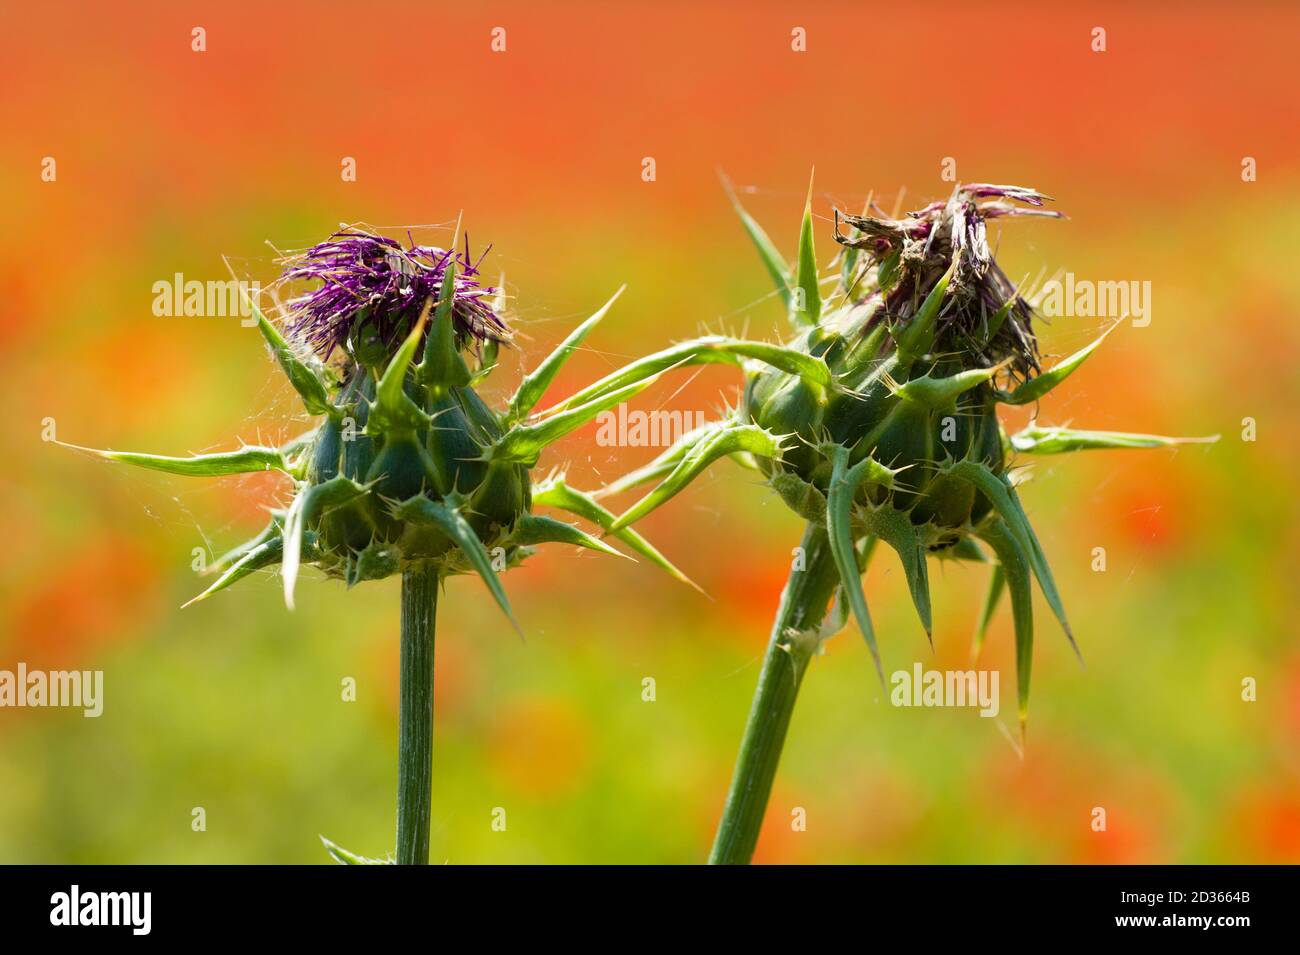 Carduus flower buds on poppy field background Stock Photo